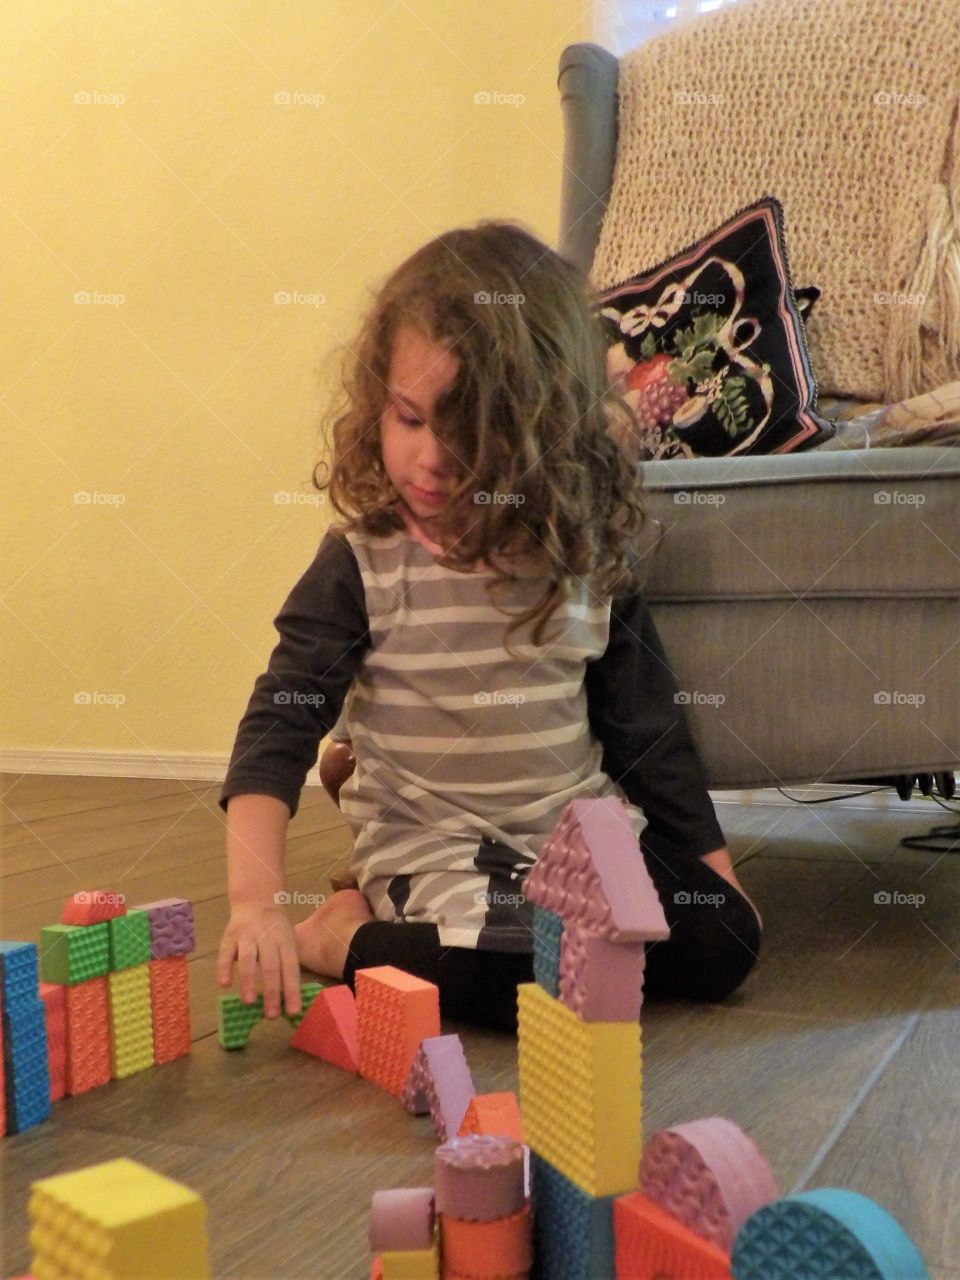 Building her castle